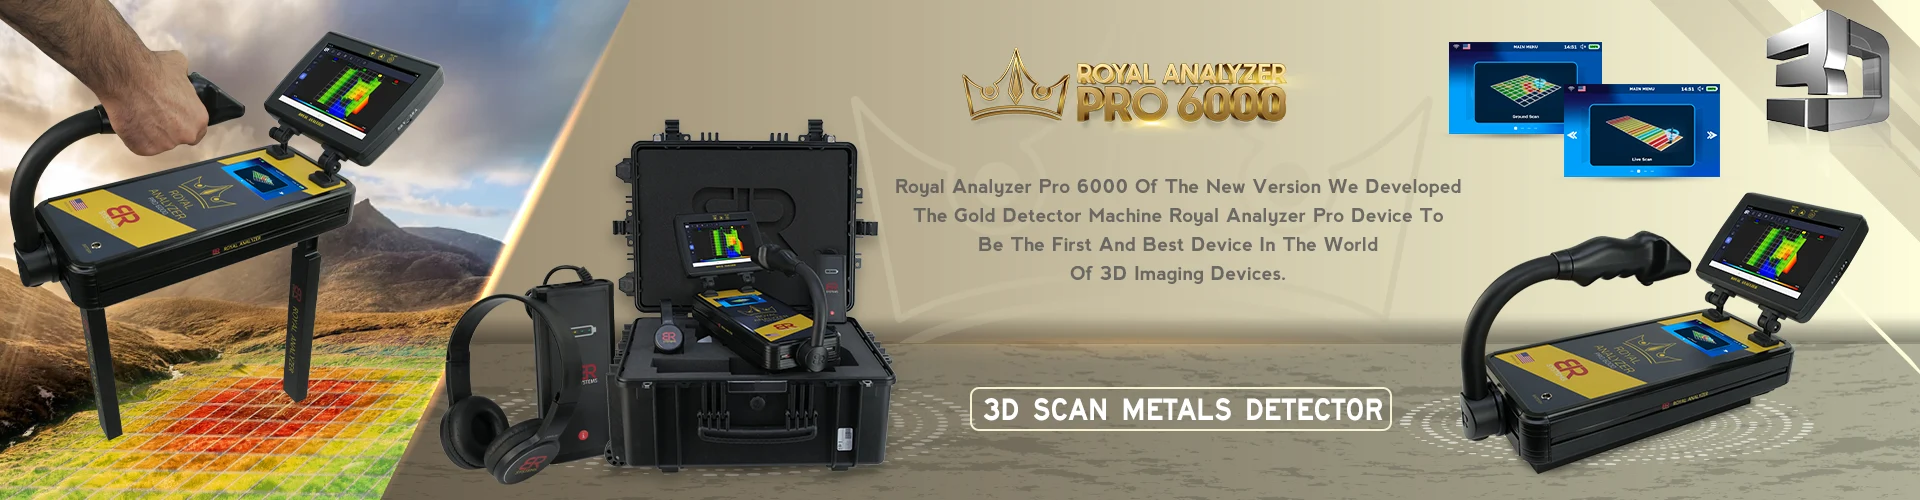 Royal Analyzer Pro 6000 gold detector 3d scanner